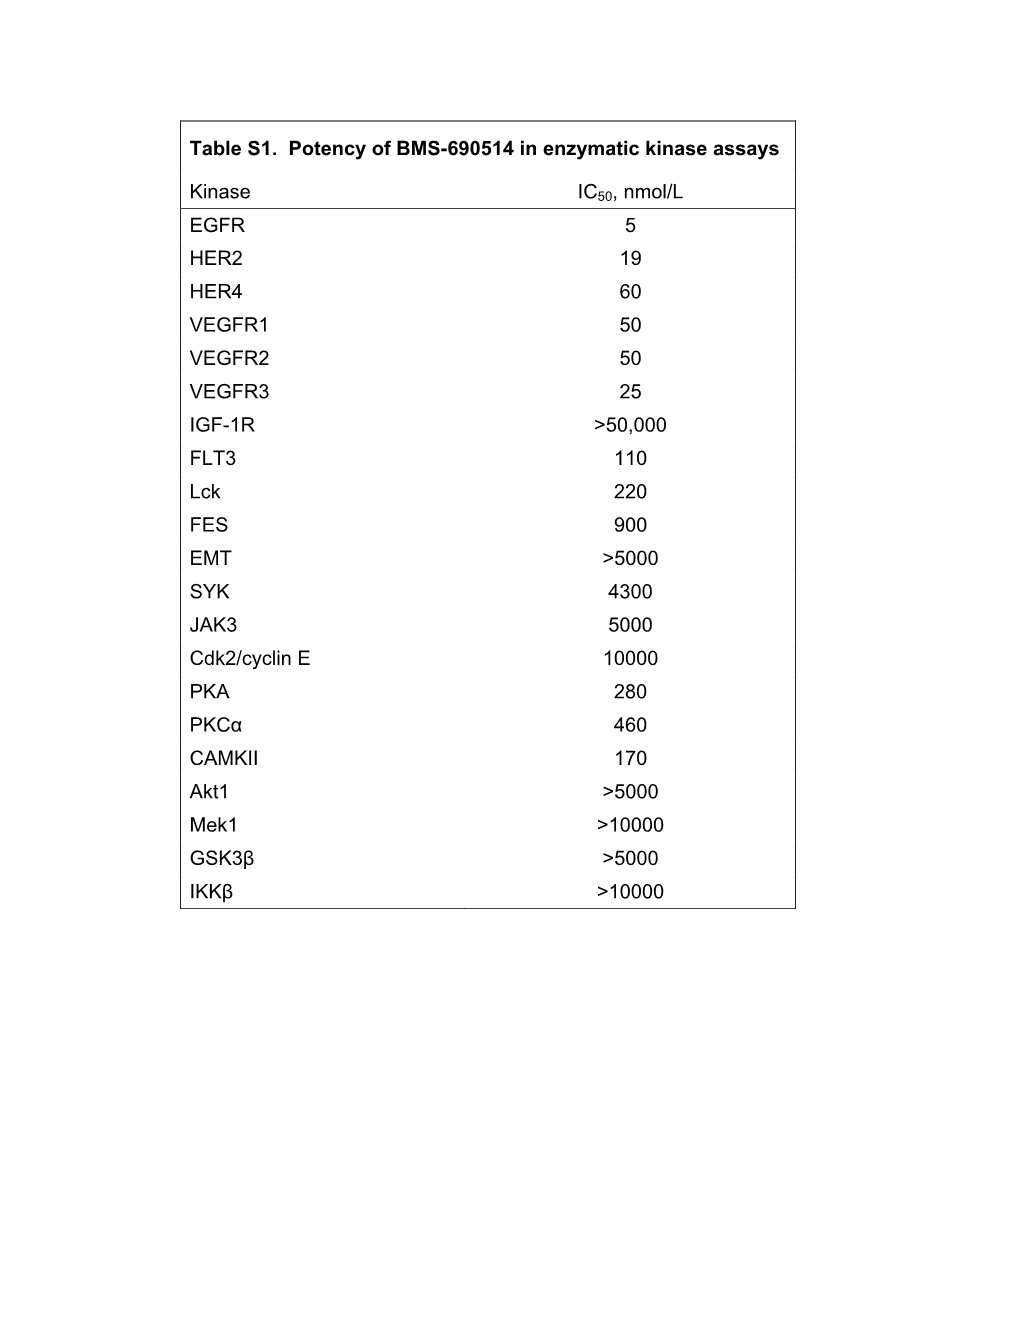 Table S1. Potency of BMS-690514 in Enzymatic Kinase Assays Kinase